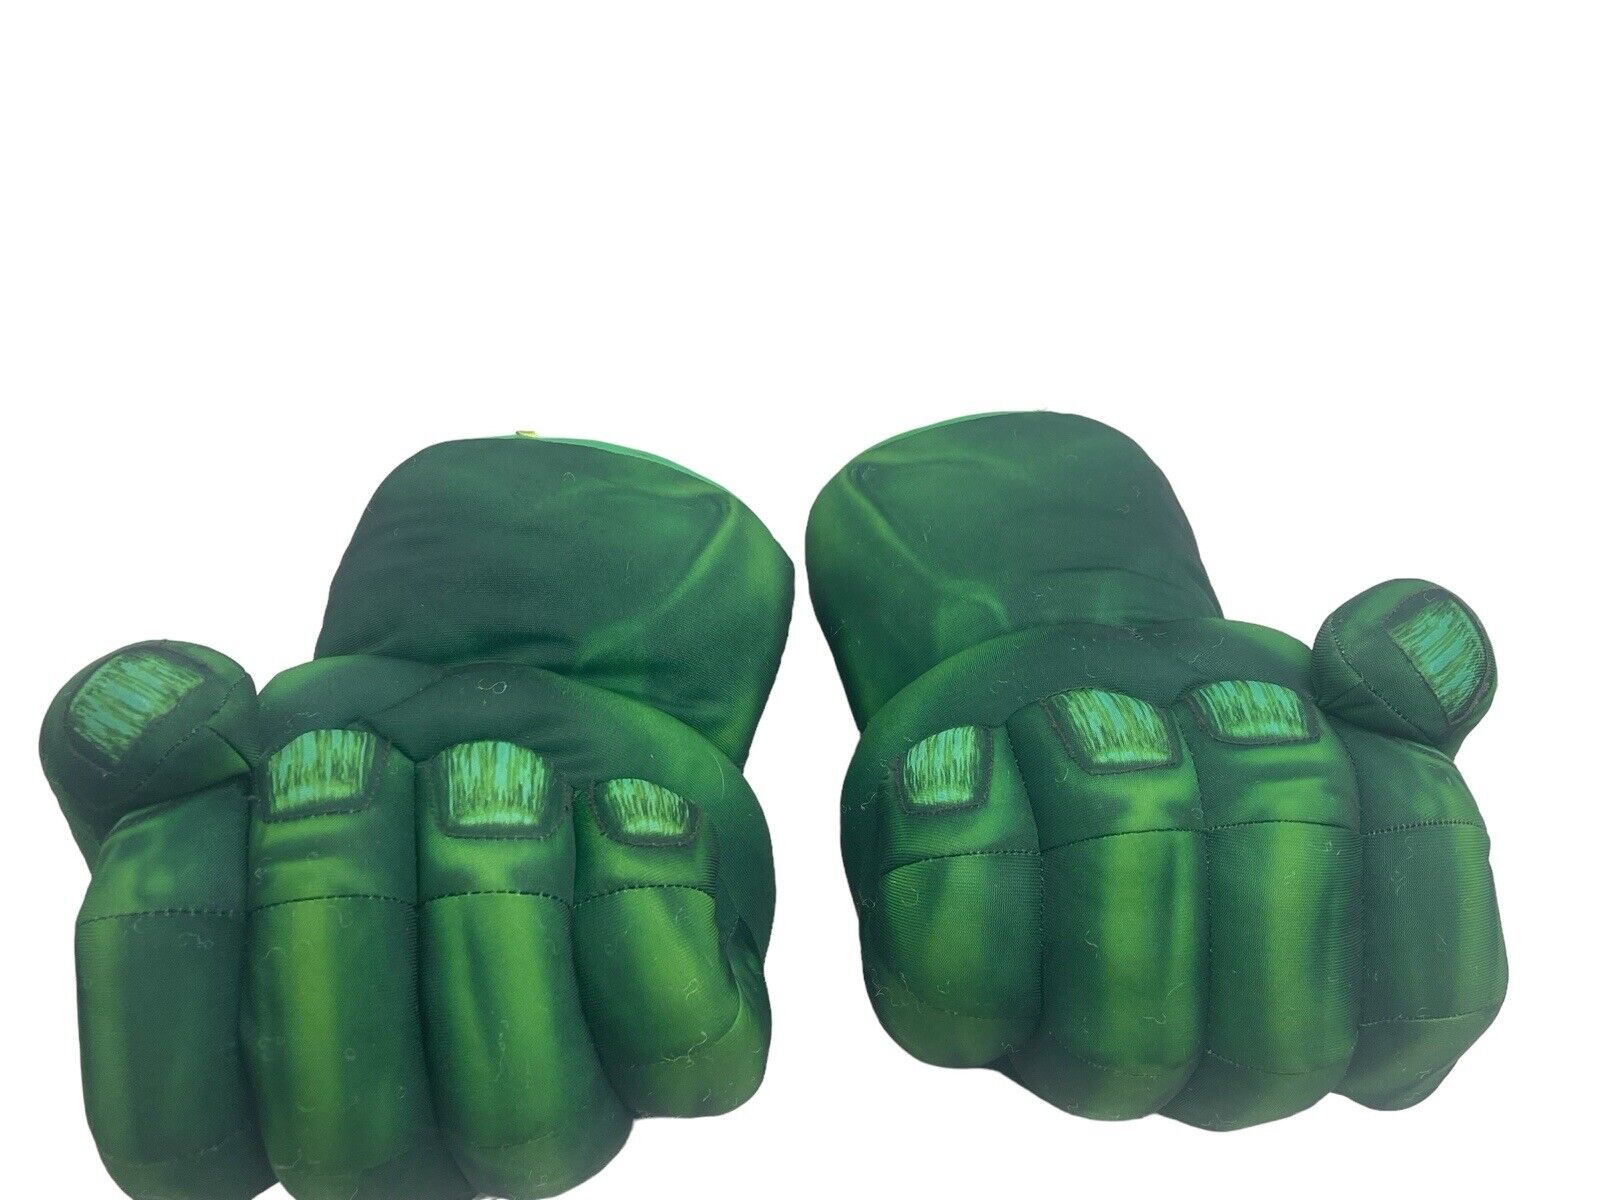 Huge Vintage Incredible Hulk Fist Smash Hands Pair Gloves 2008 Marvel Avengers on eBay